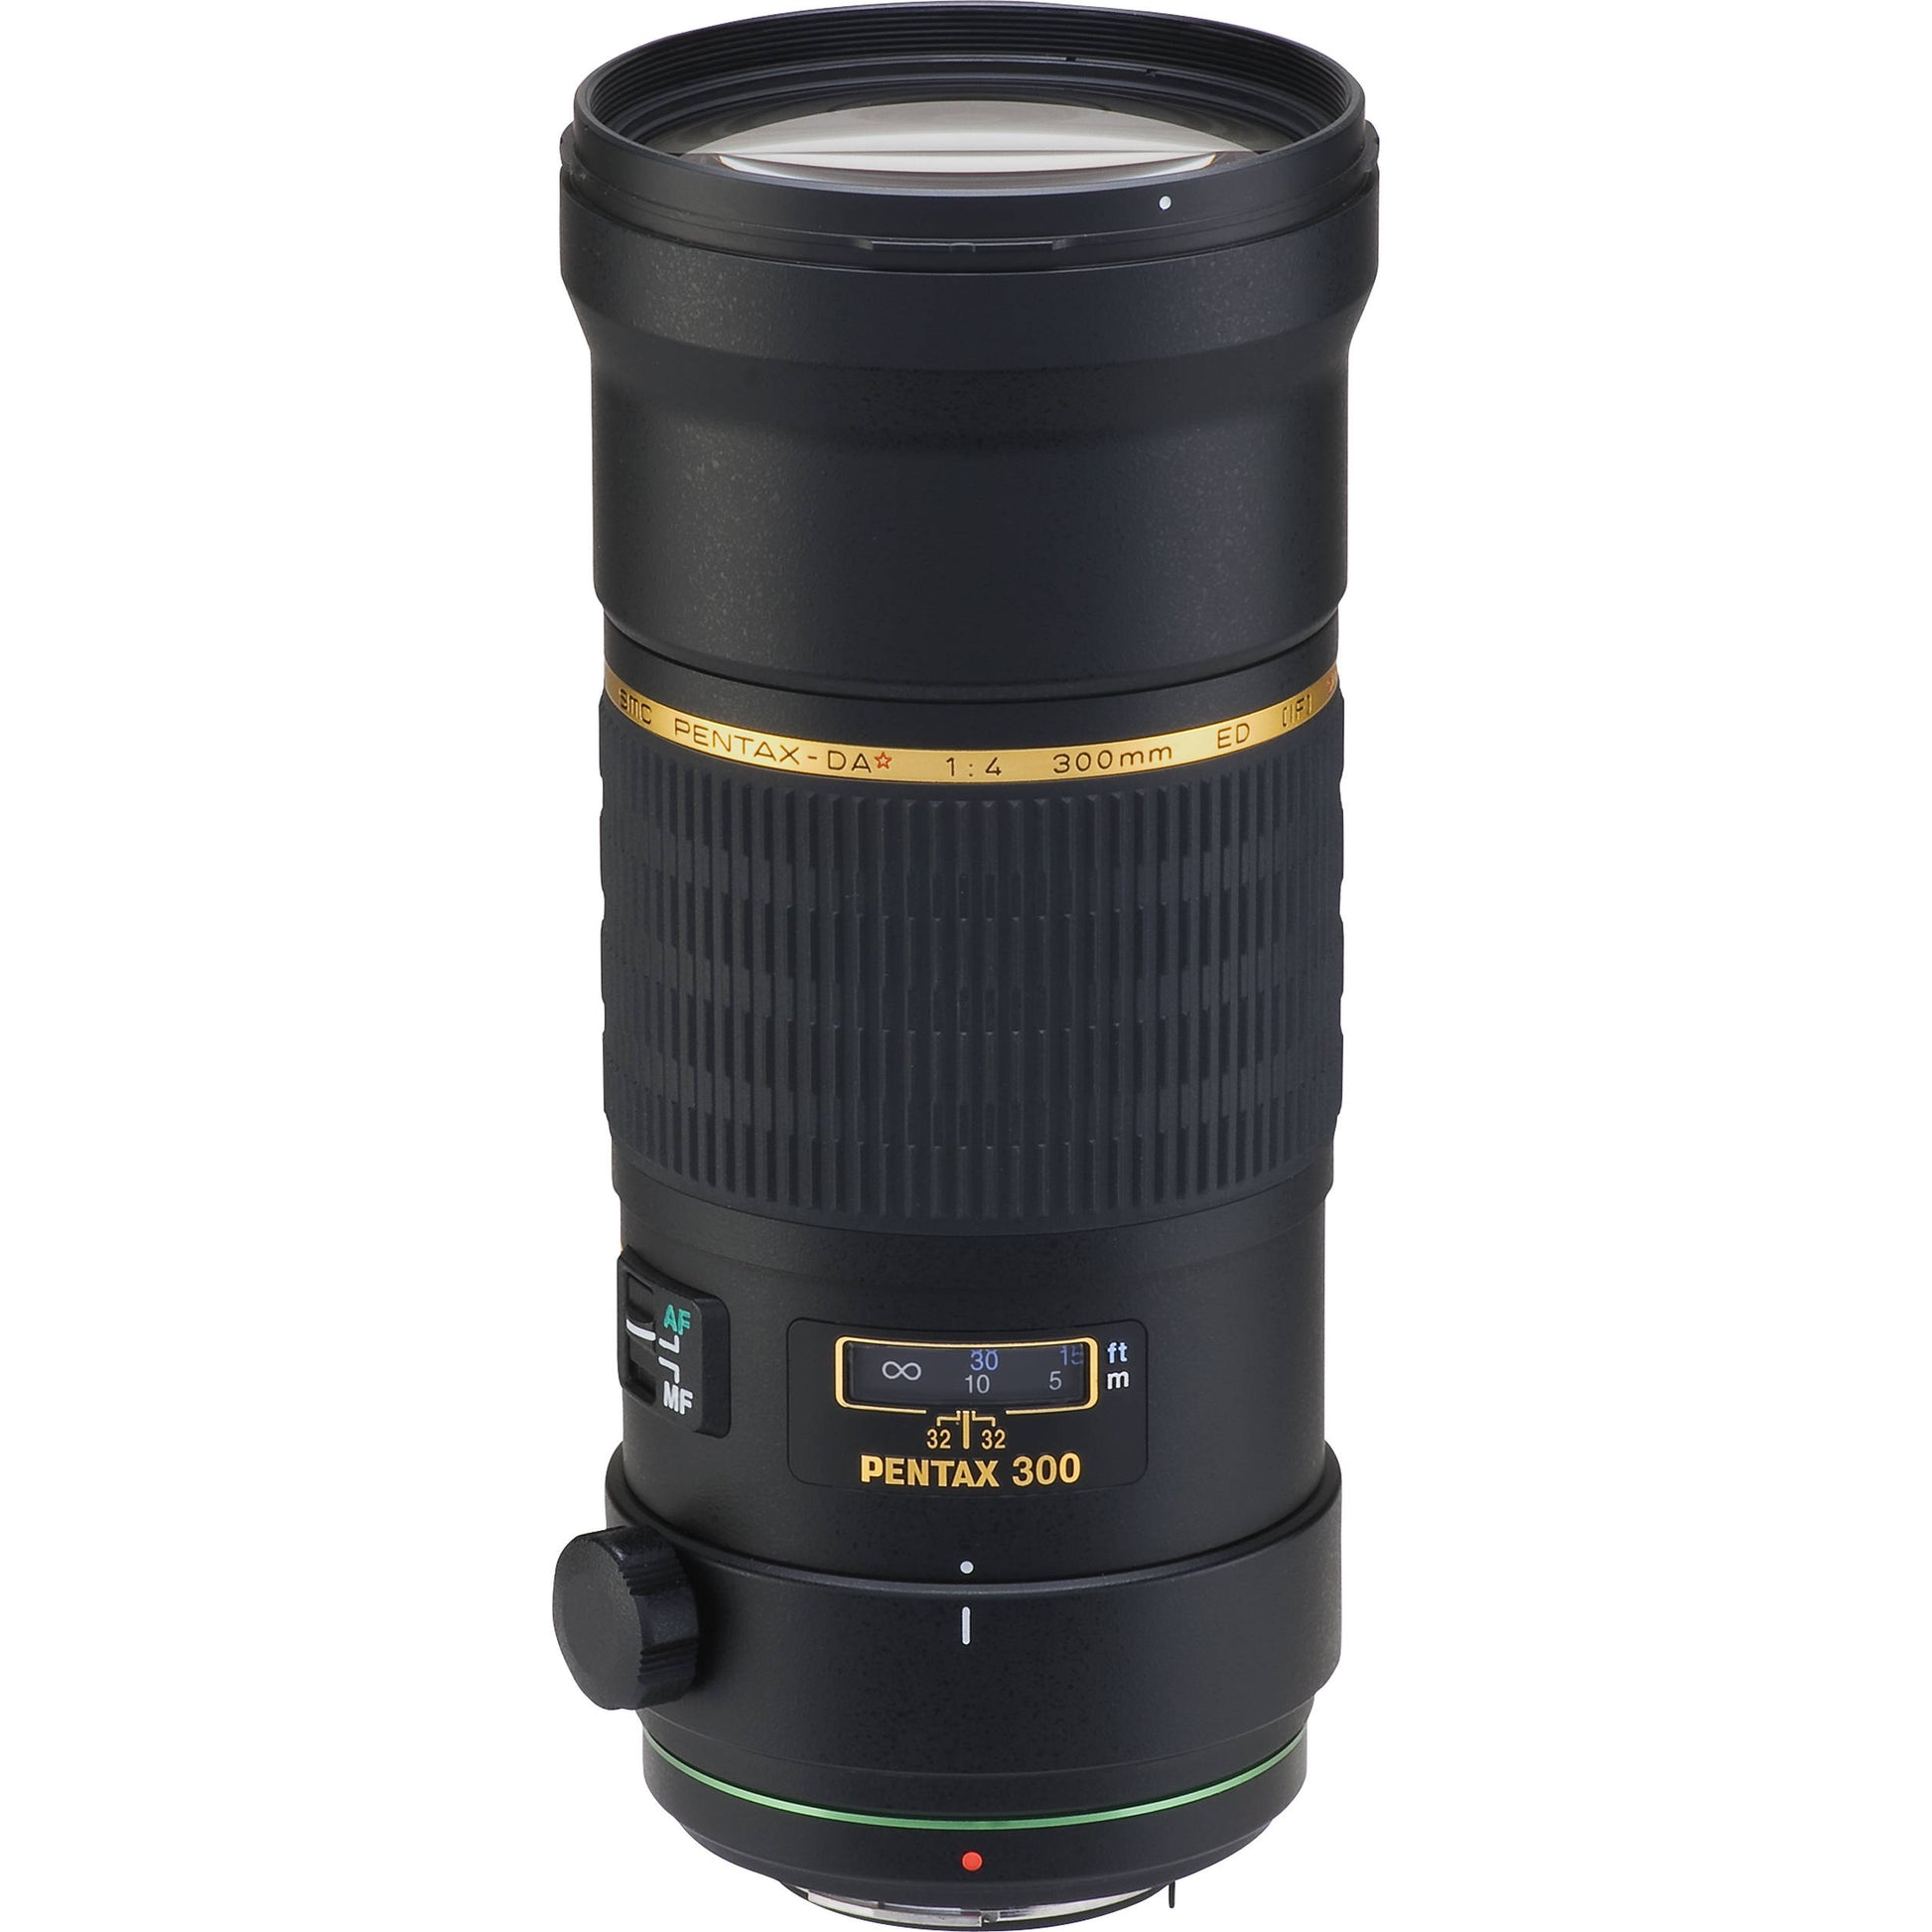 Pentax 300mm f4 ED lens k-mount